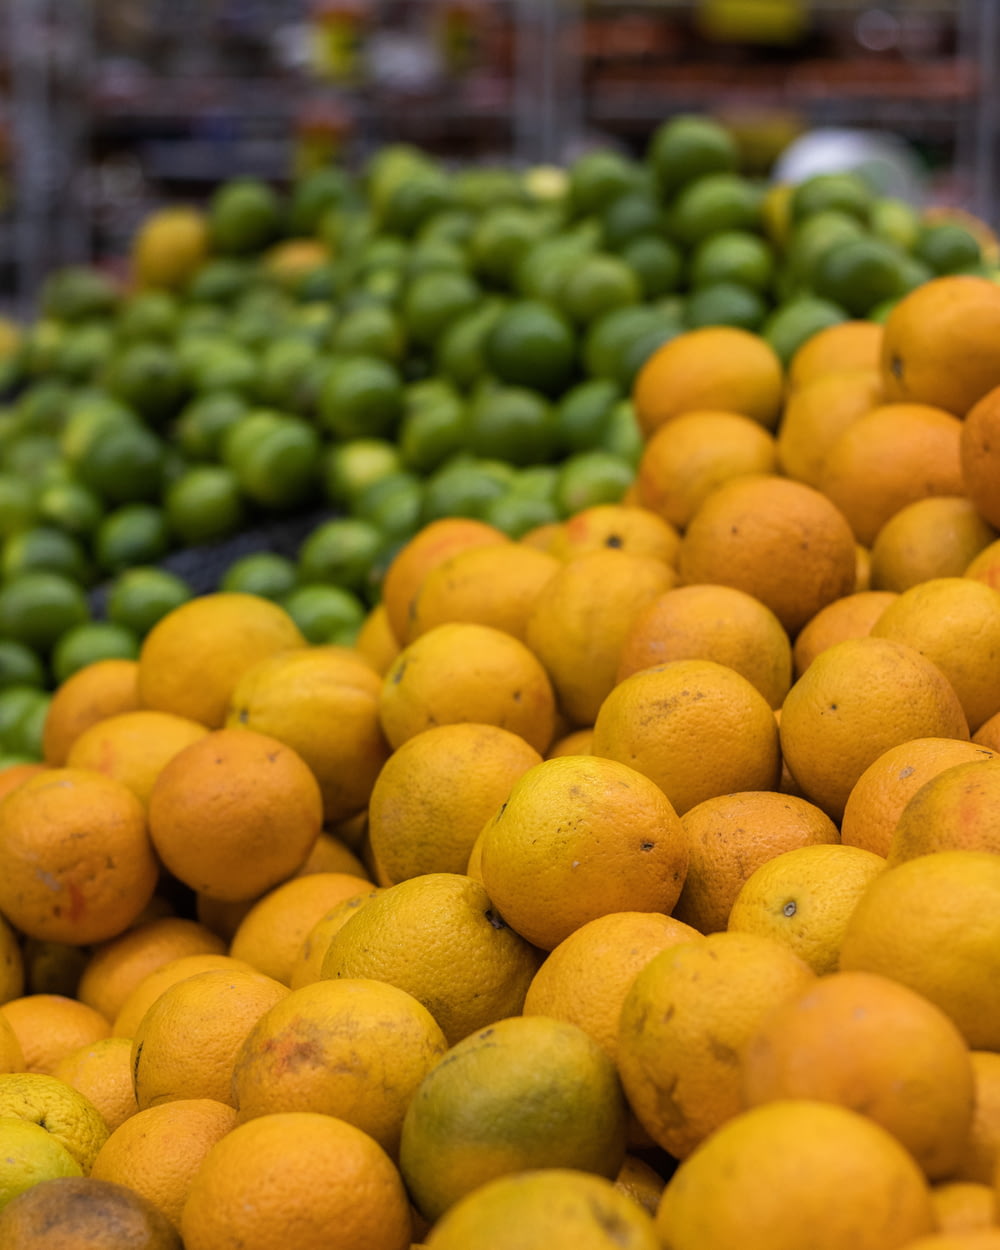 yellow citrus fruits on display